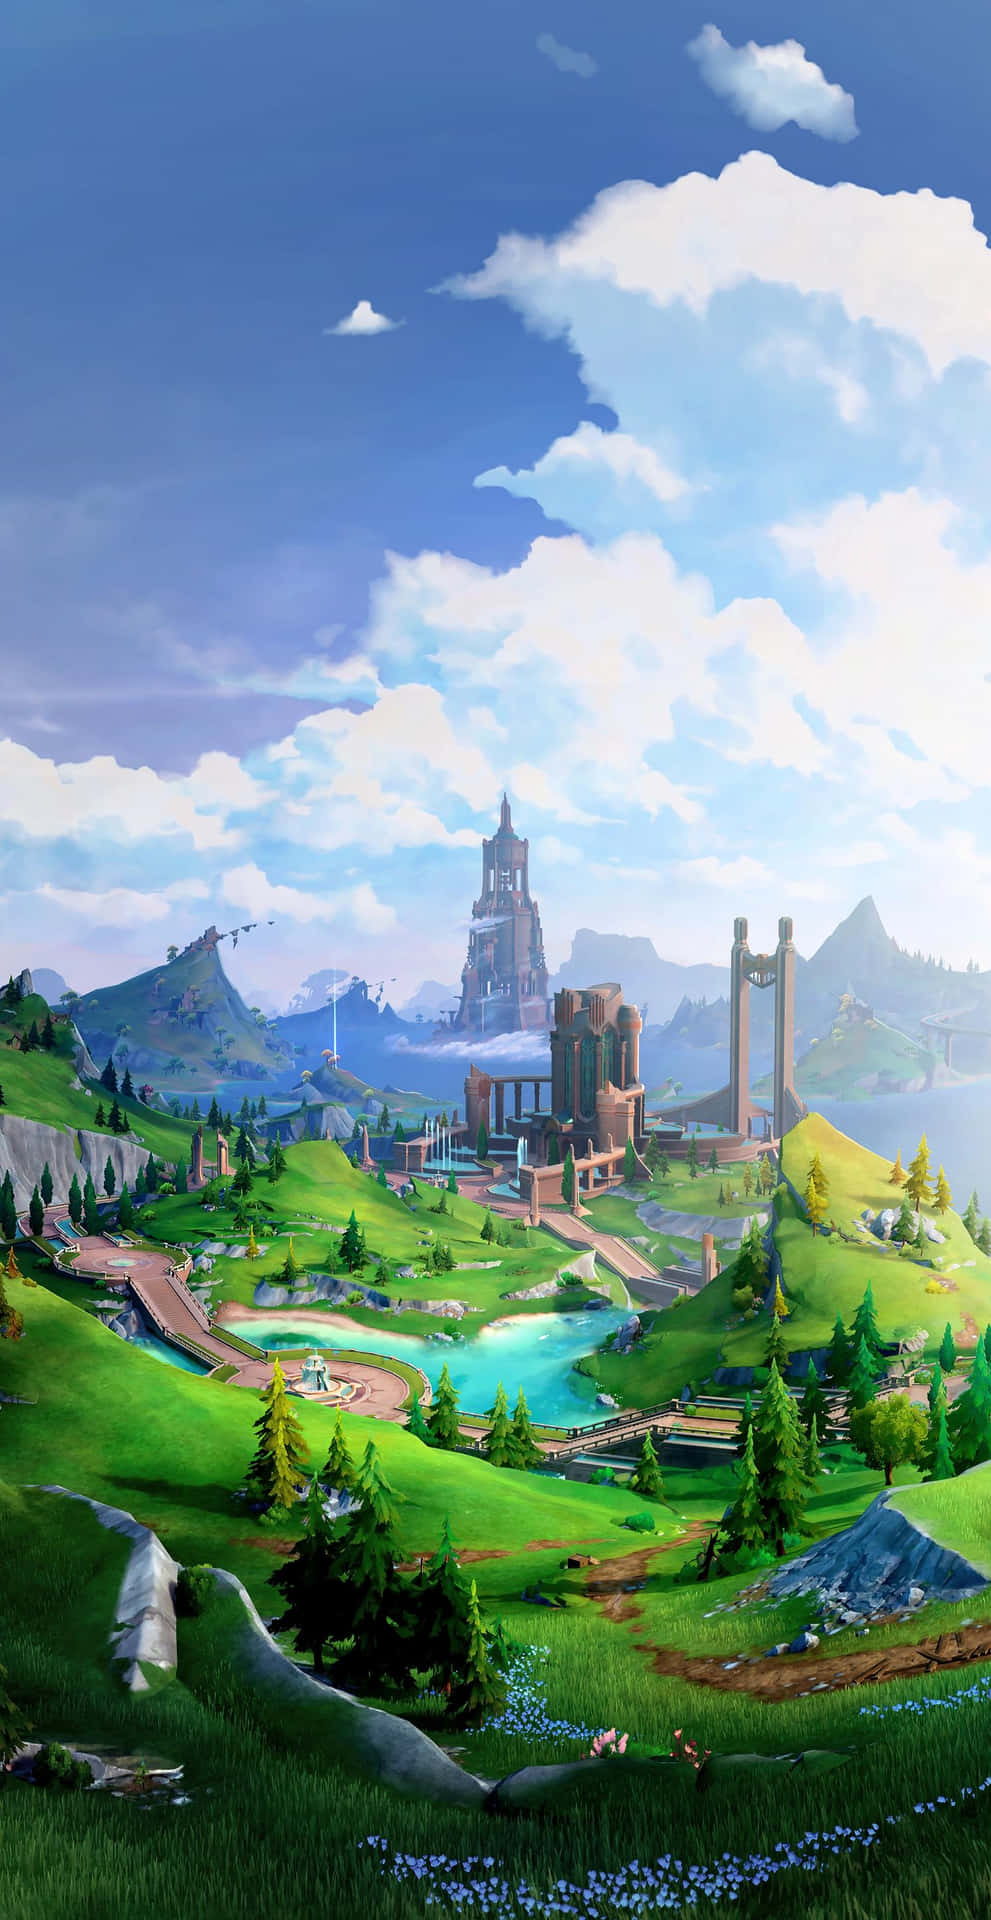 Fantasy Castle Landscape.jpg Wallpaper